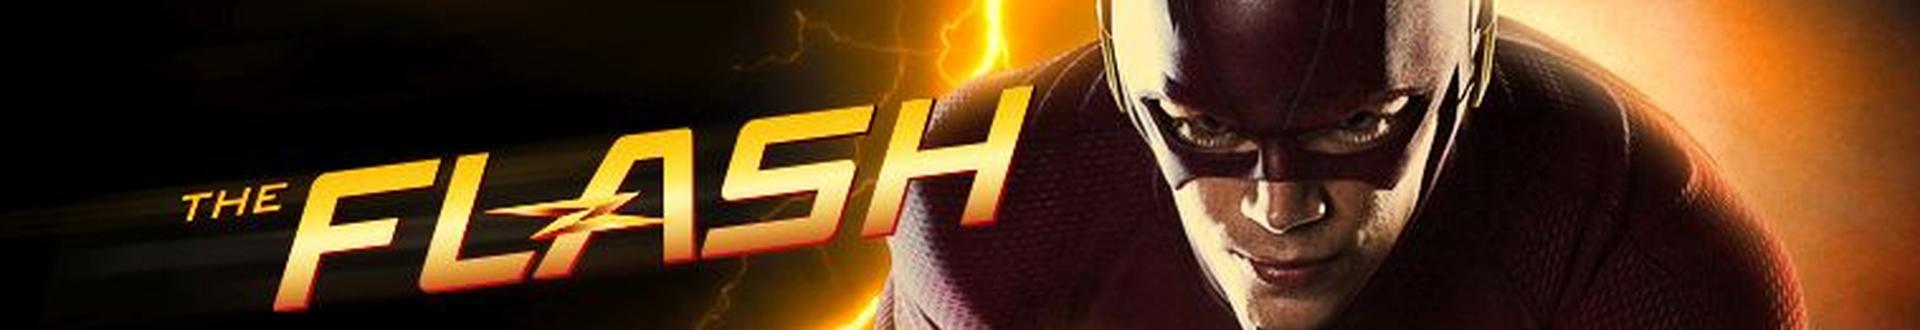 Image illustrative de The Flash (2014)